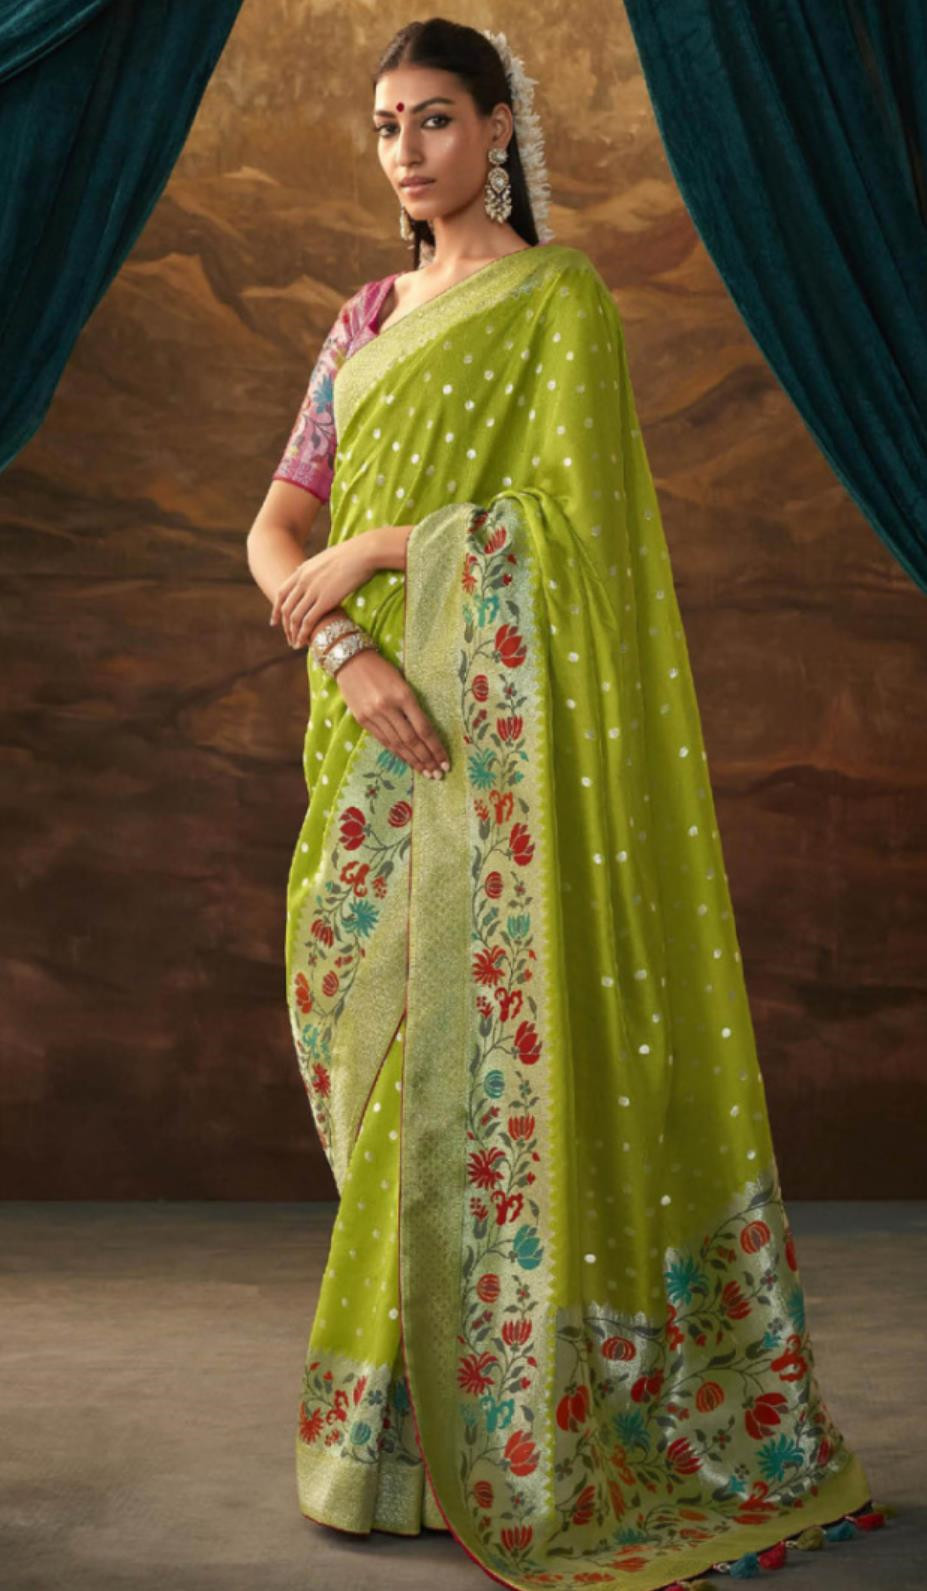 India Woman Festive Dress National Green Sari Indian Traditional Clothing